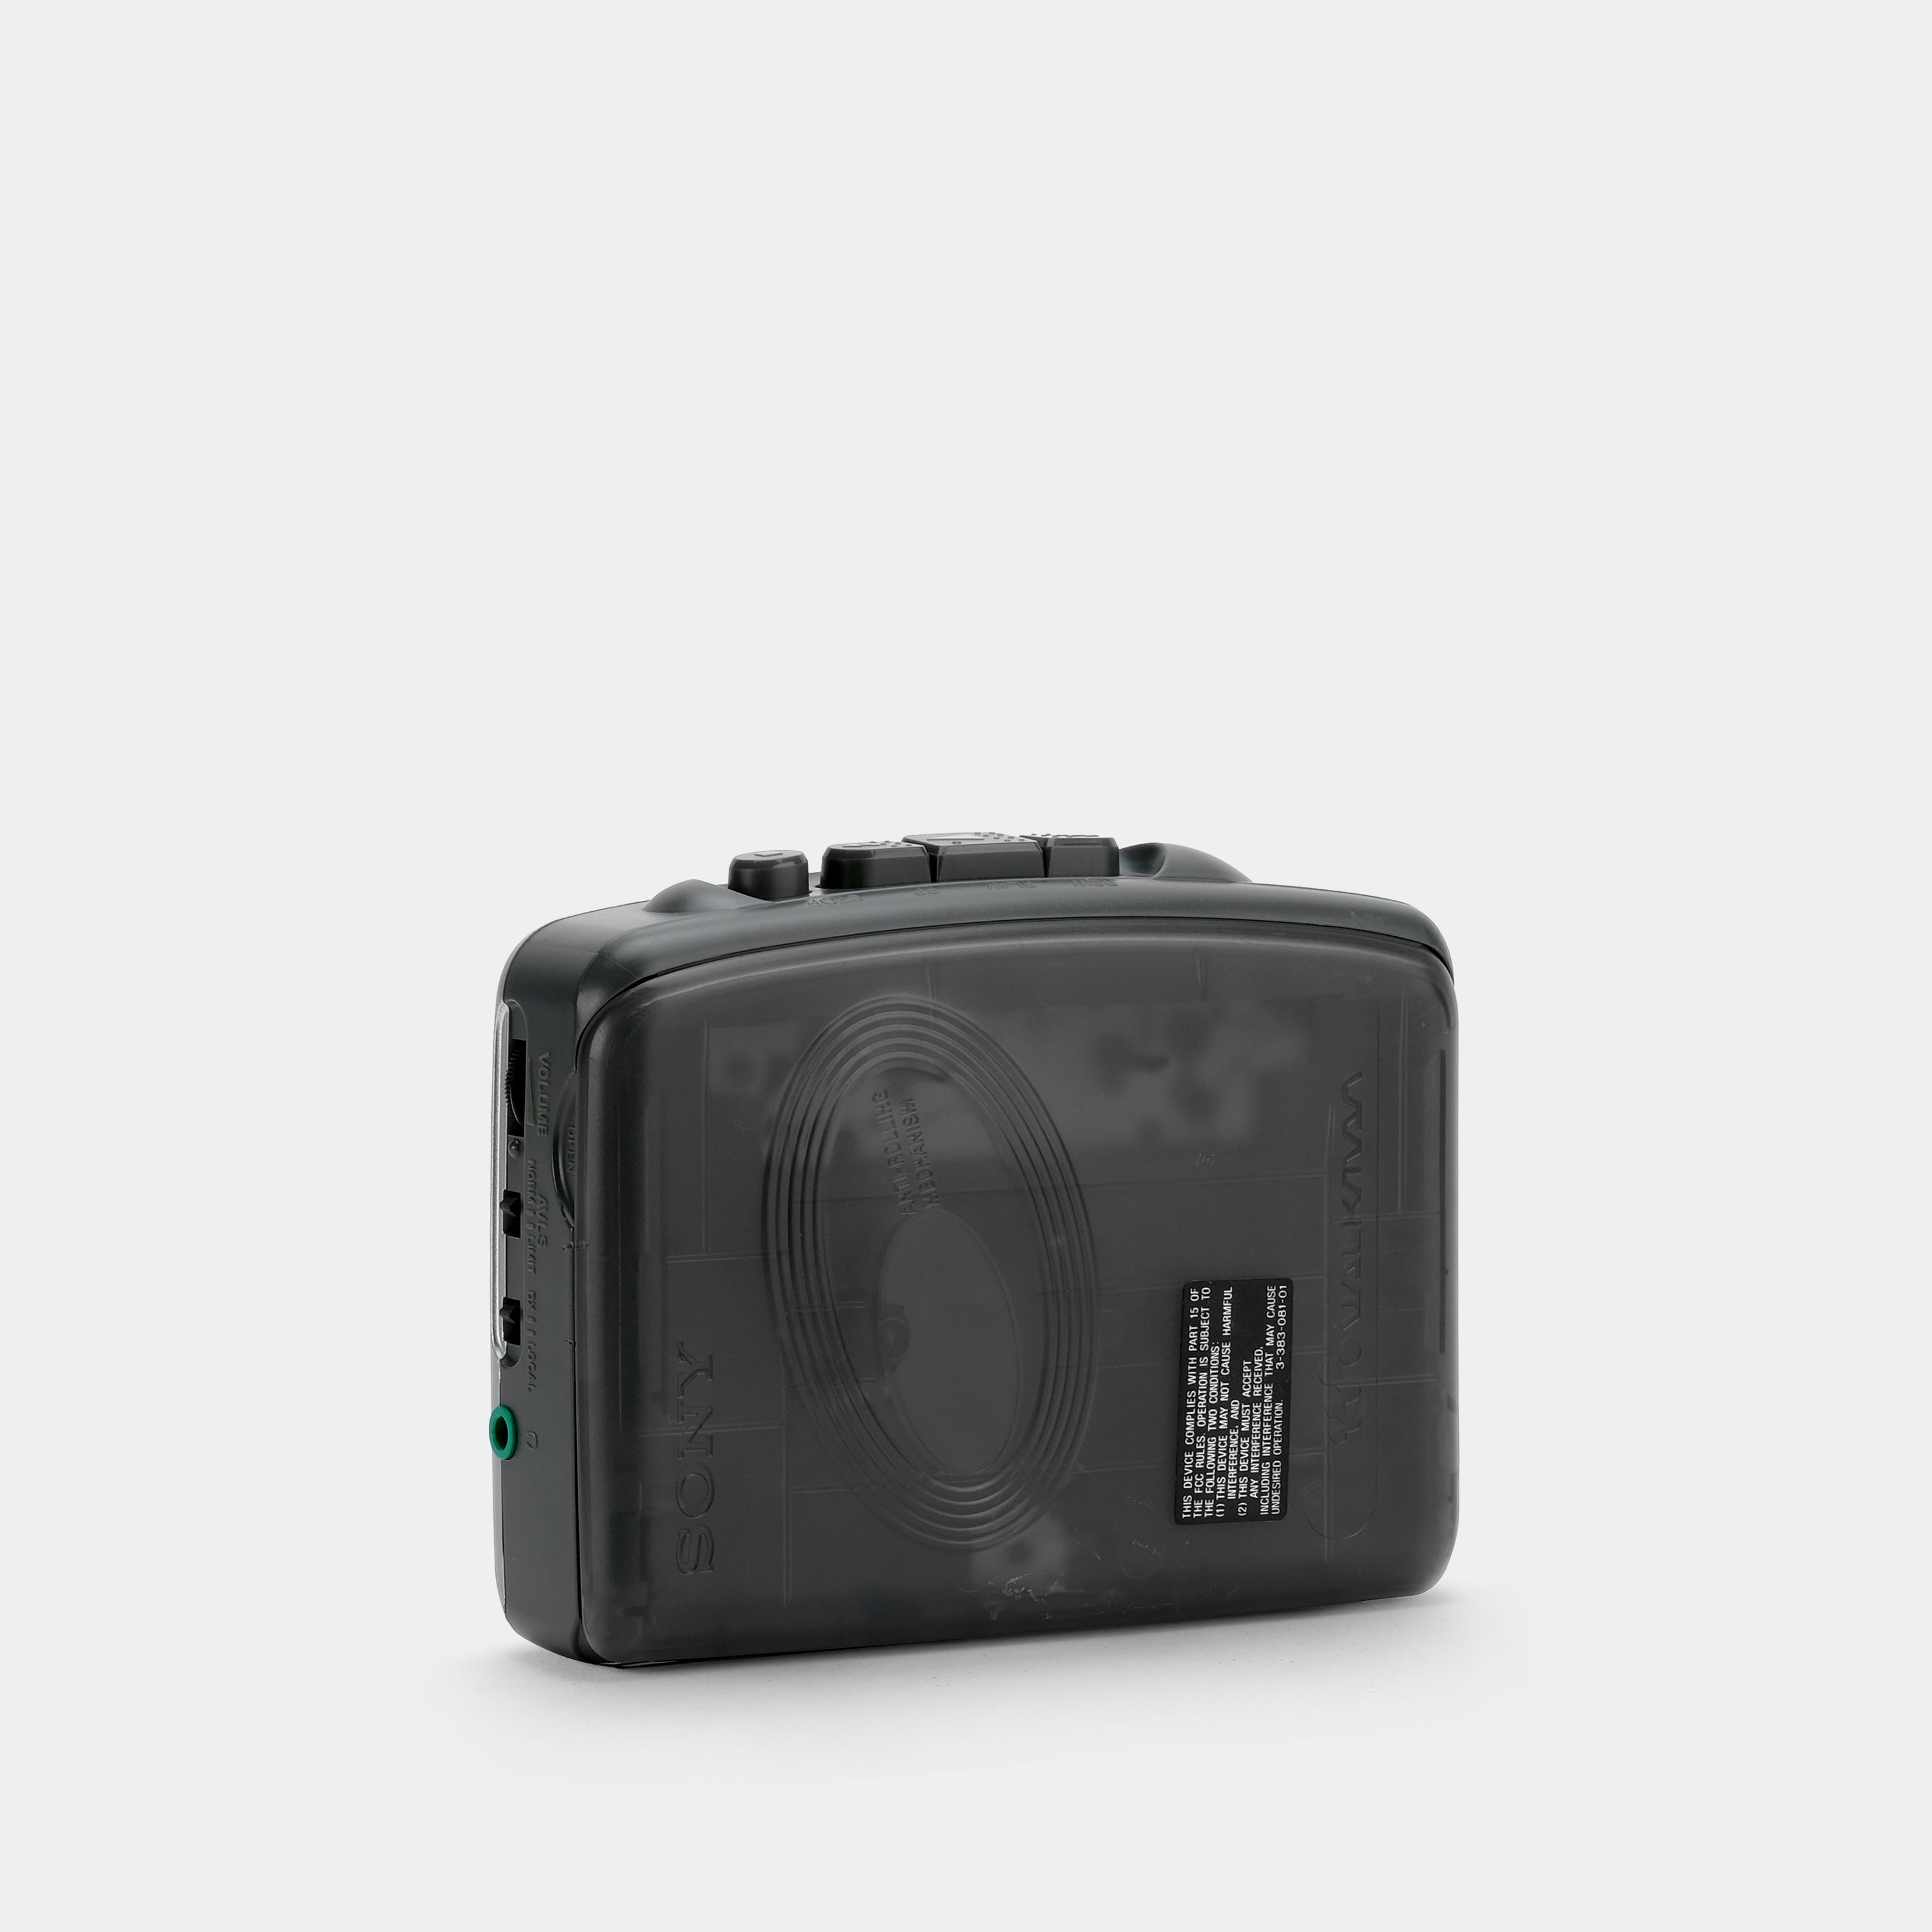 Sony Walkman WM-FX244 AM/FM Portable Cassette Player